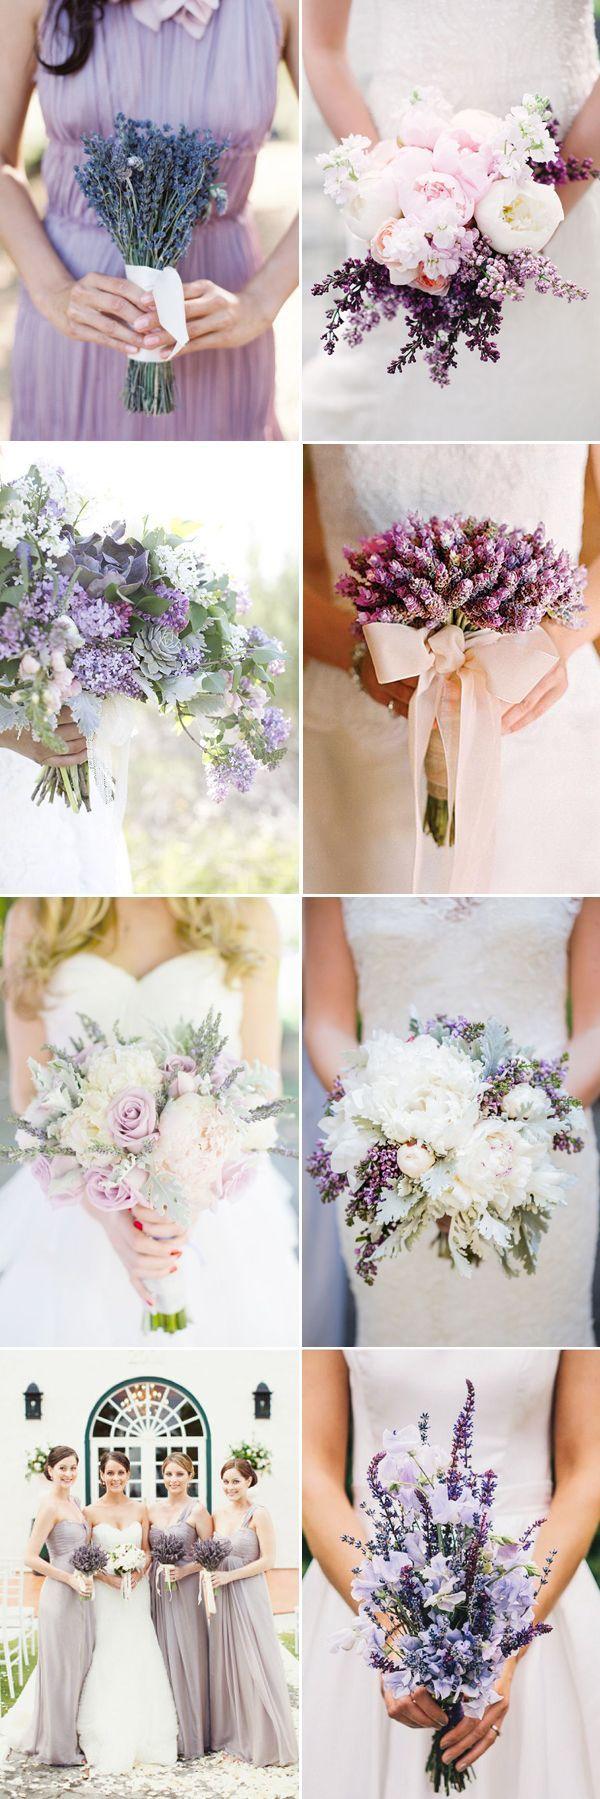 زفاف - 45 Romantic Ways To Decorate Your Wedding With Lavender